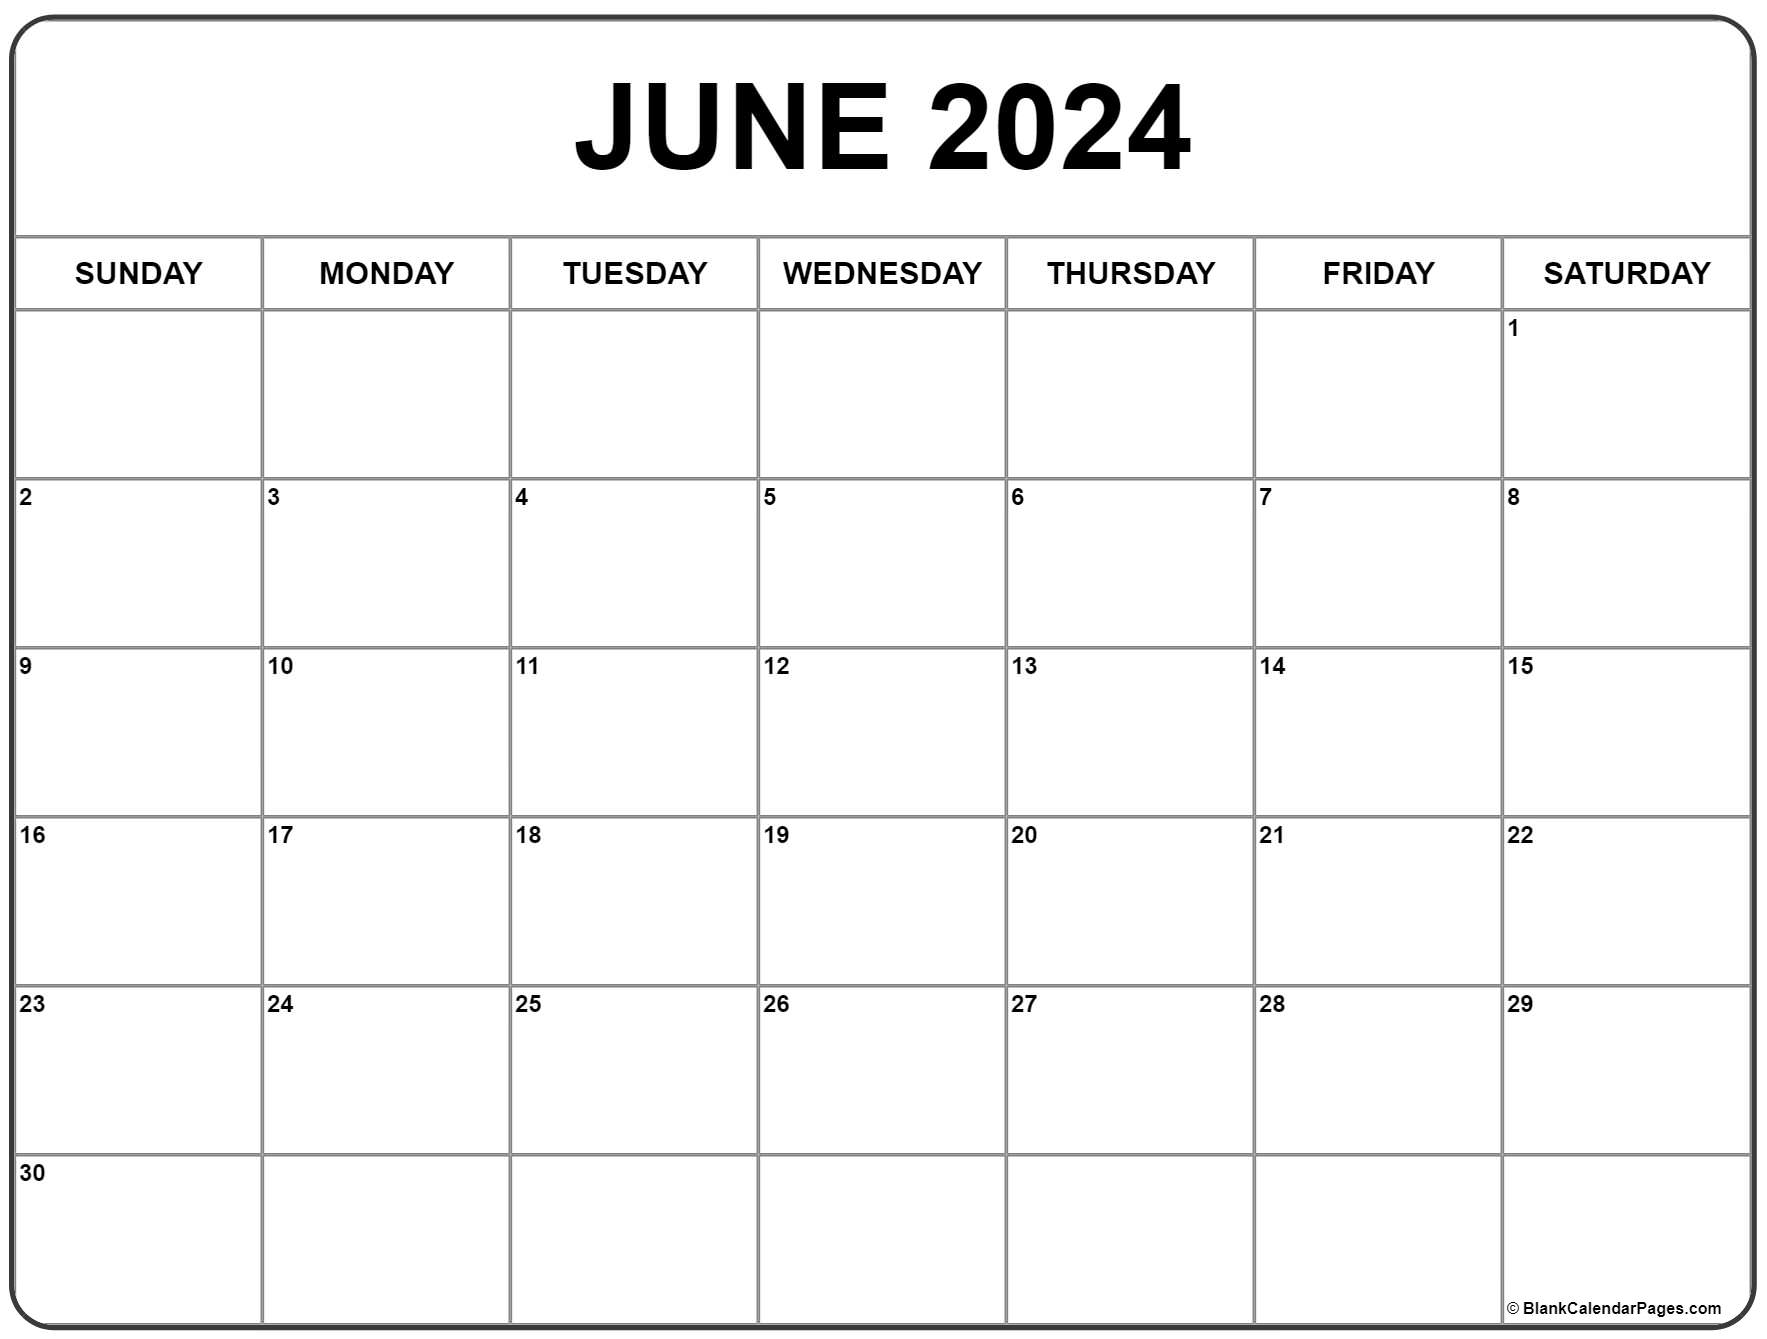 June 2024 Calendar | Free Printable Calendar for June 2024 Monthly Calendar Printable